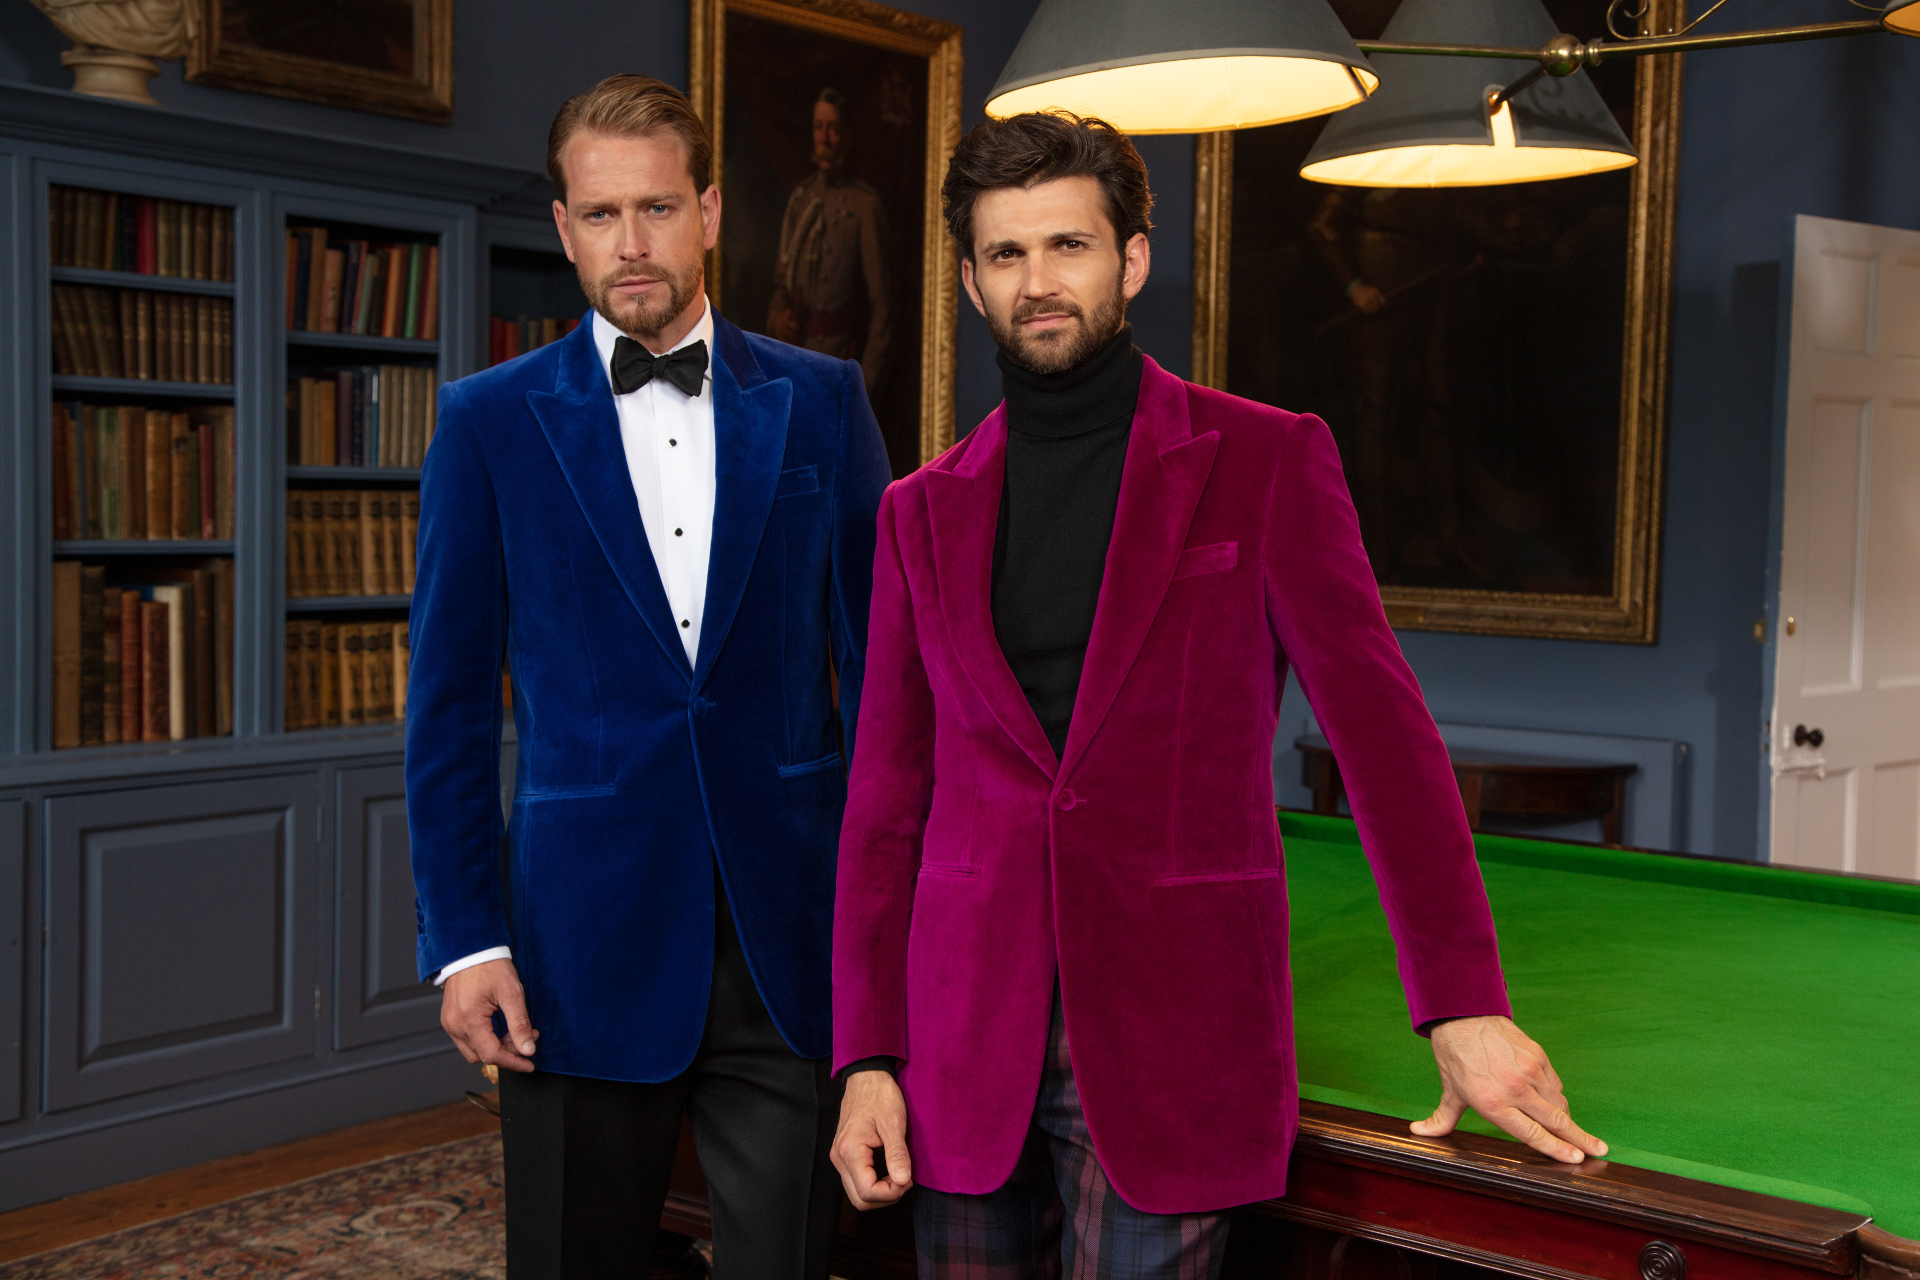 Men stood at snooker table wearing velvet jackets